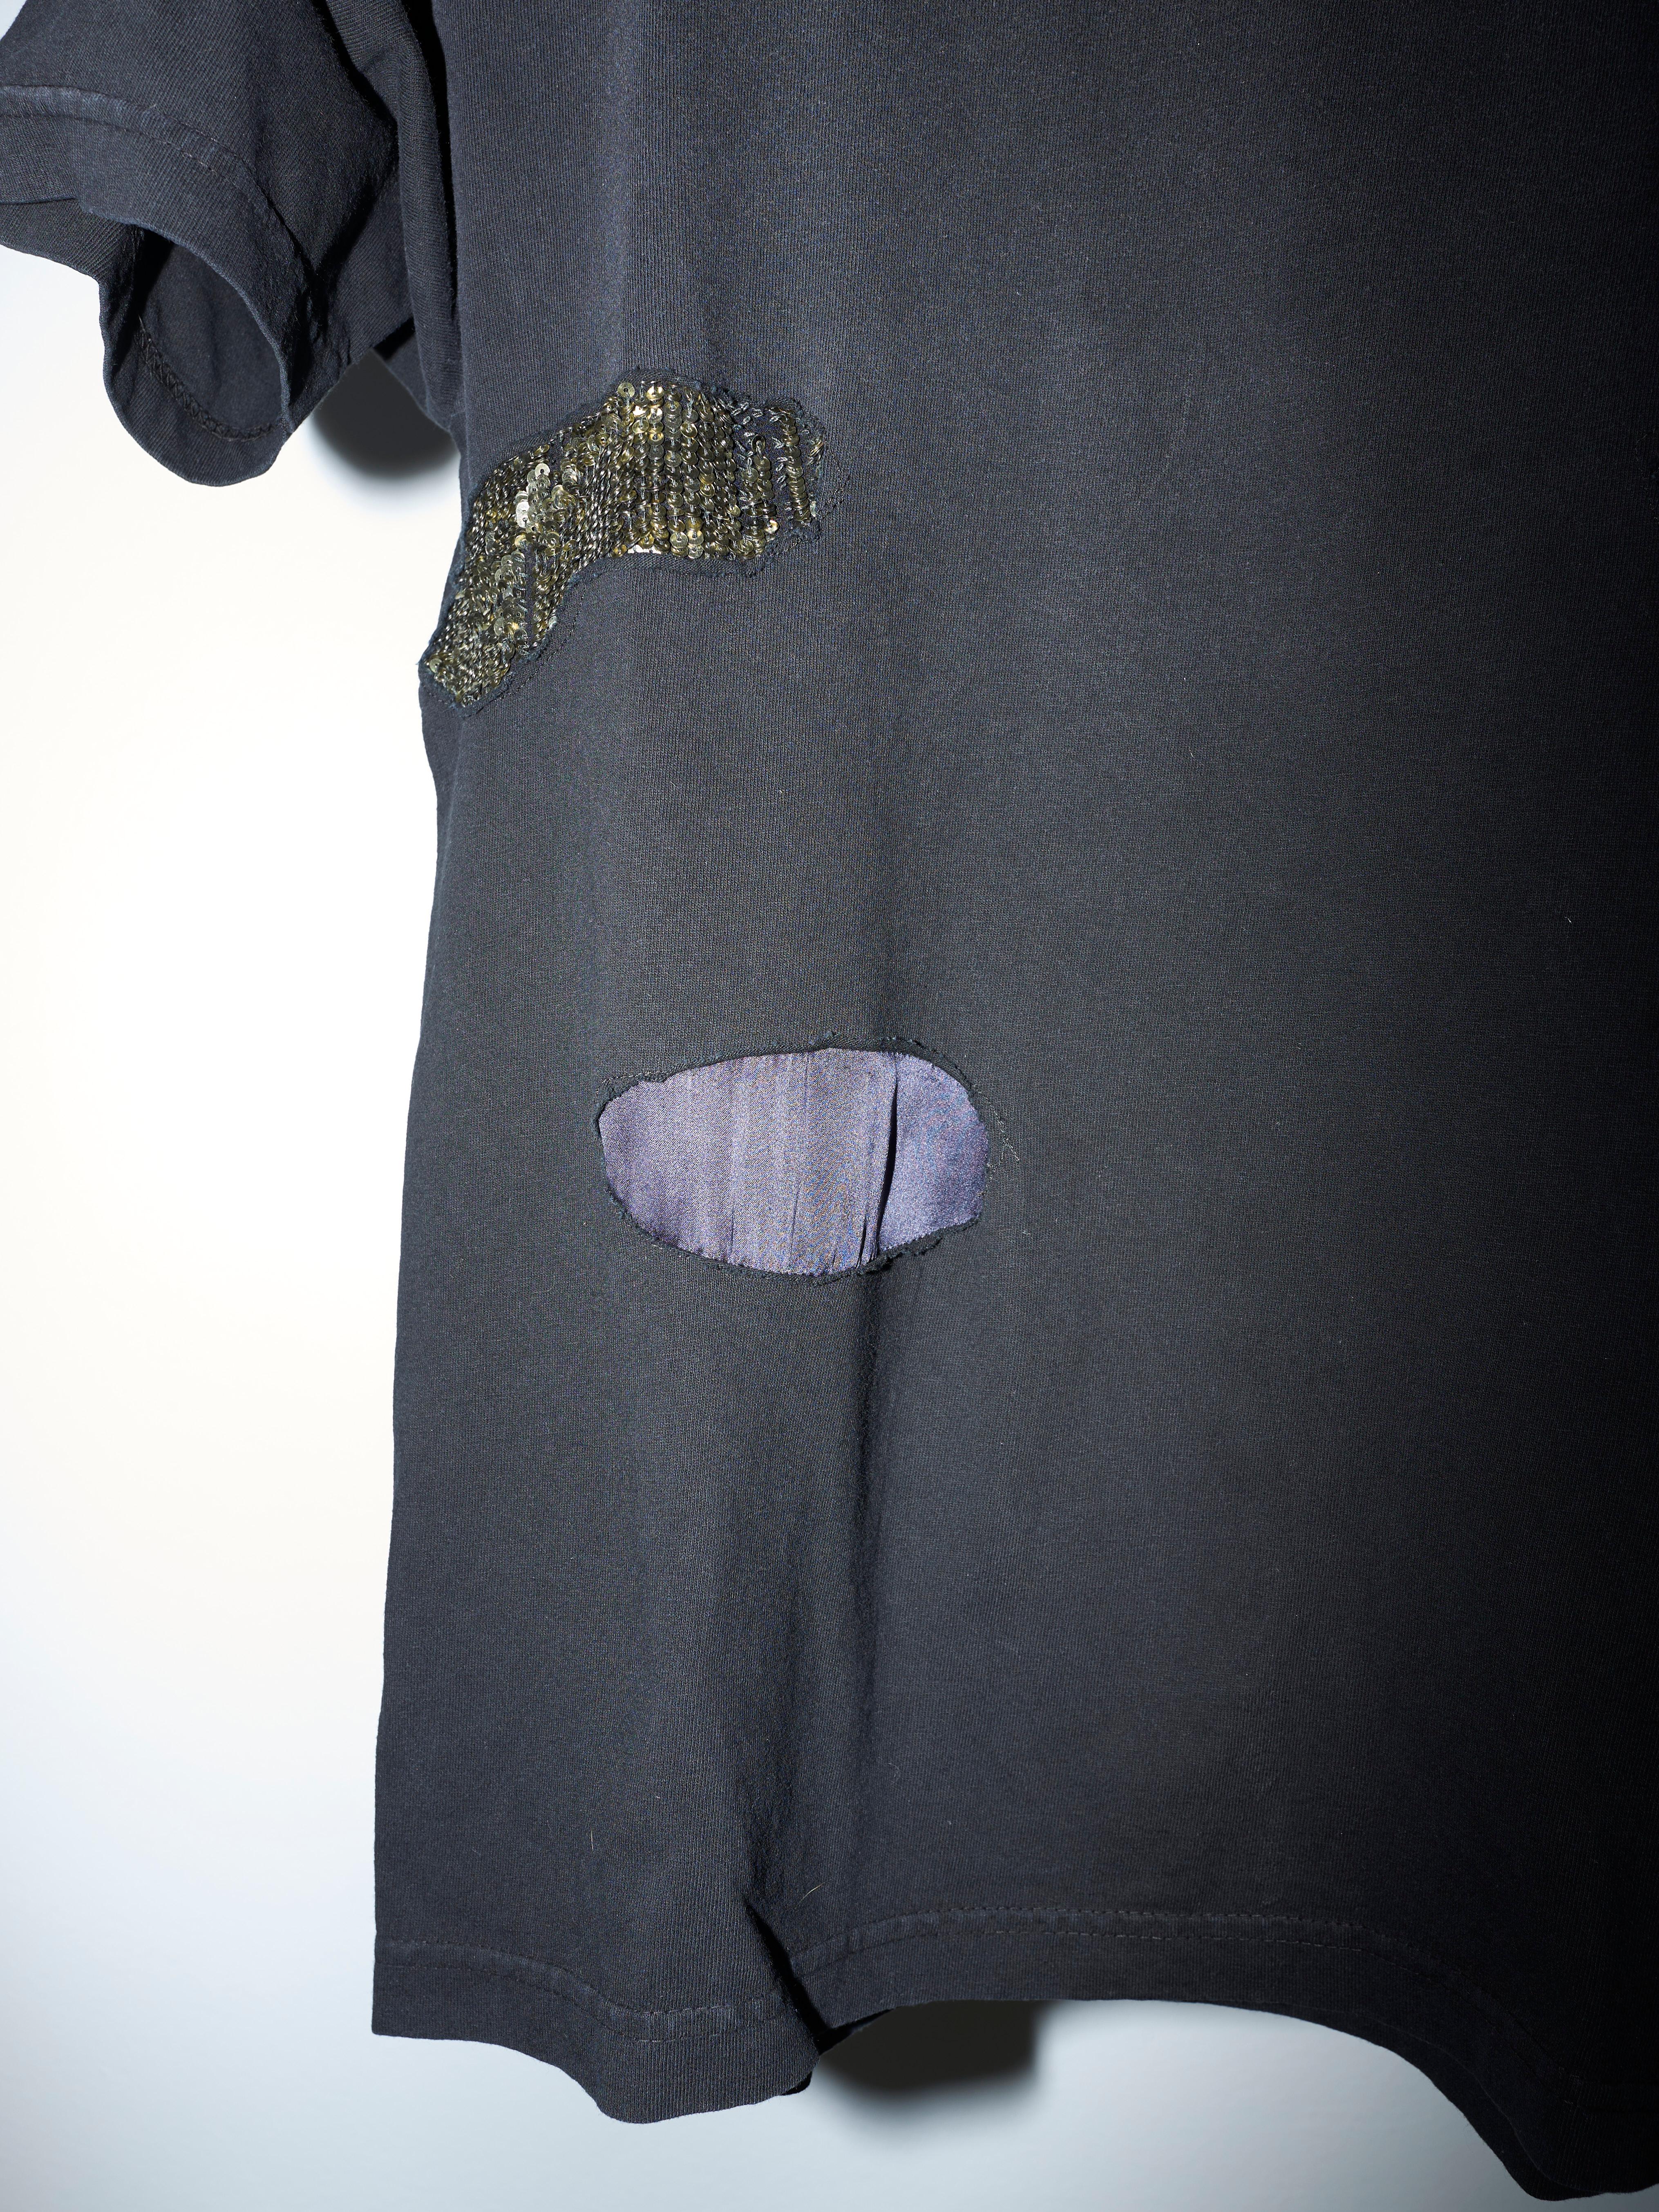 J Dauphin Black T-Shirt Embellished  Patch Work Sequin Silk Body Cotton  9